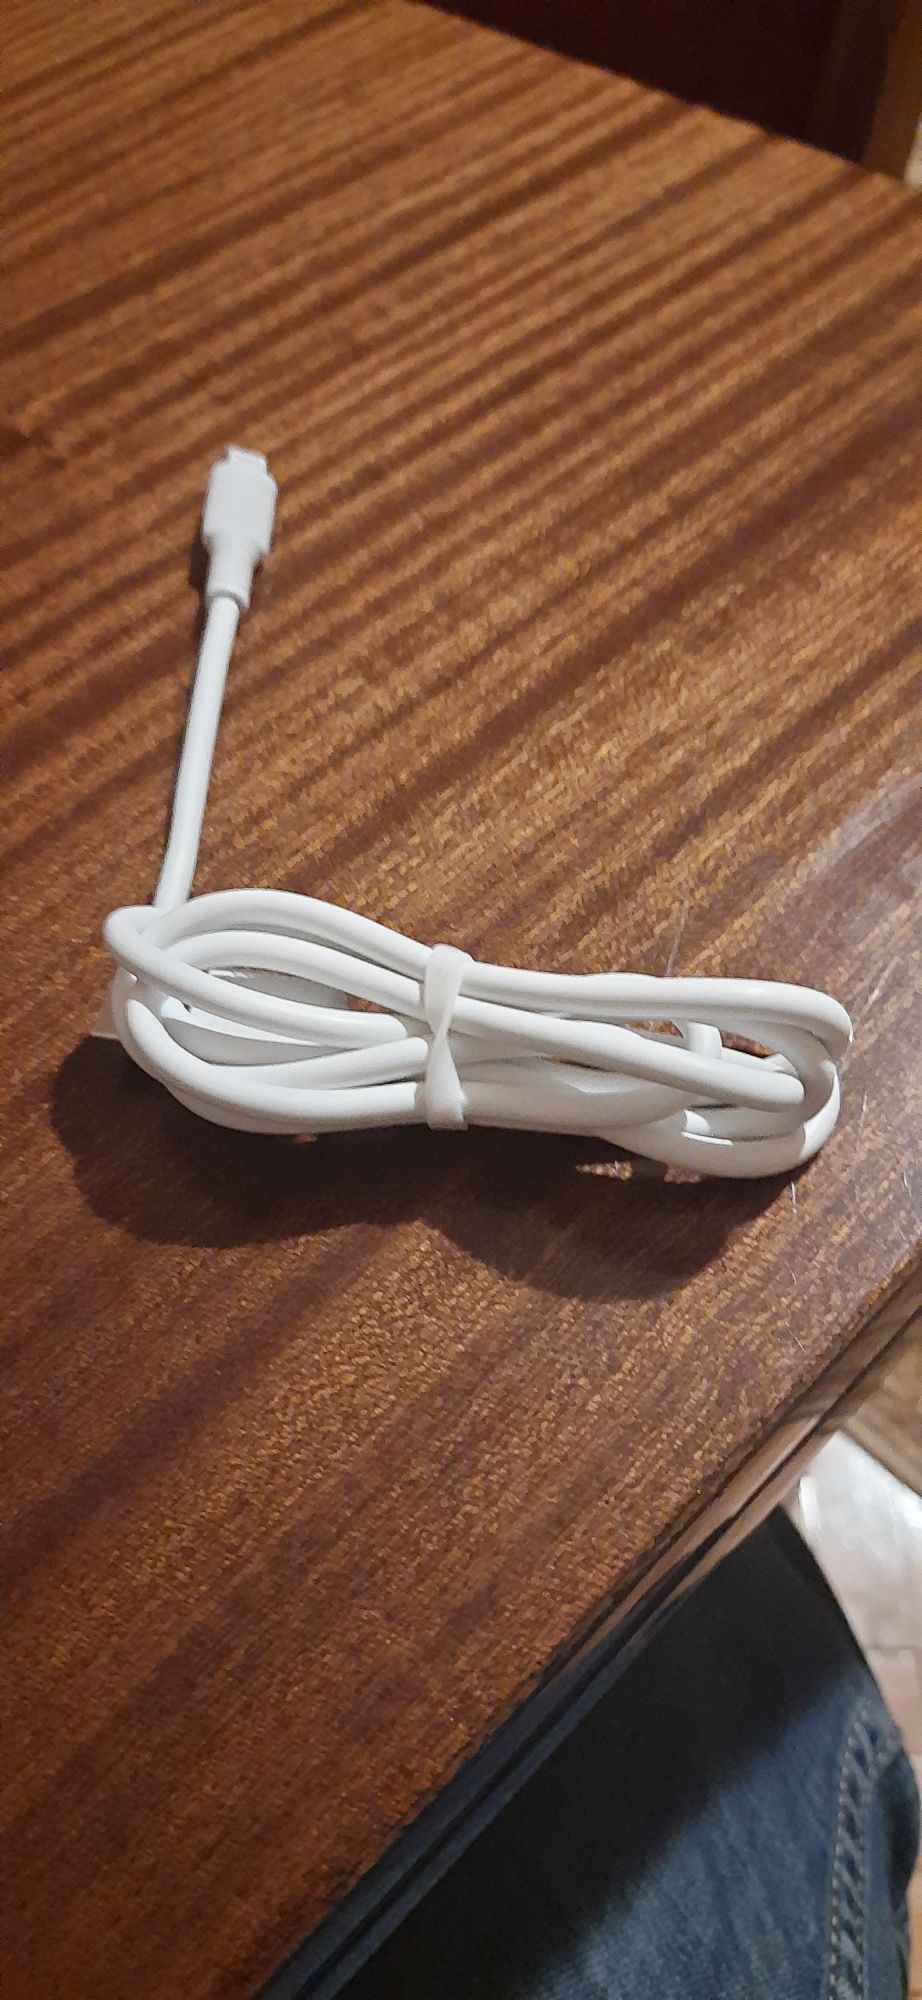 IPhone Kabel apple do USB typ A do ładowania lightning